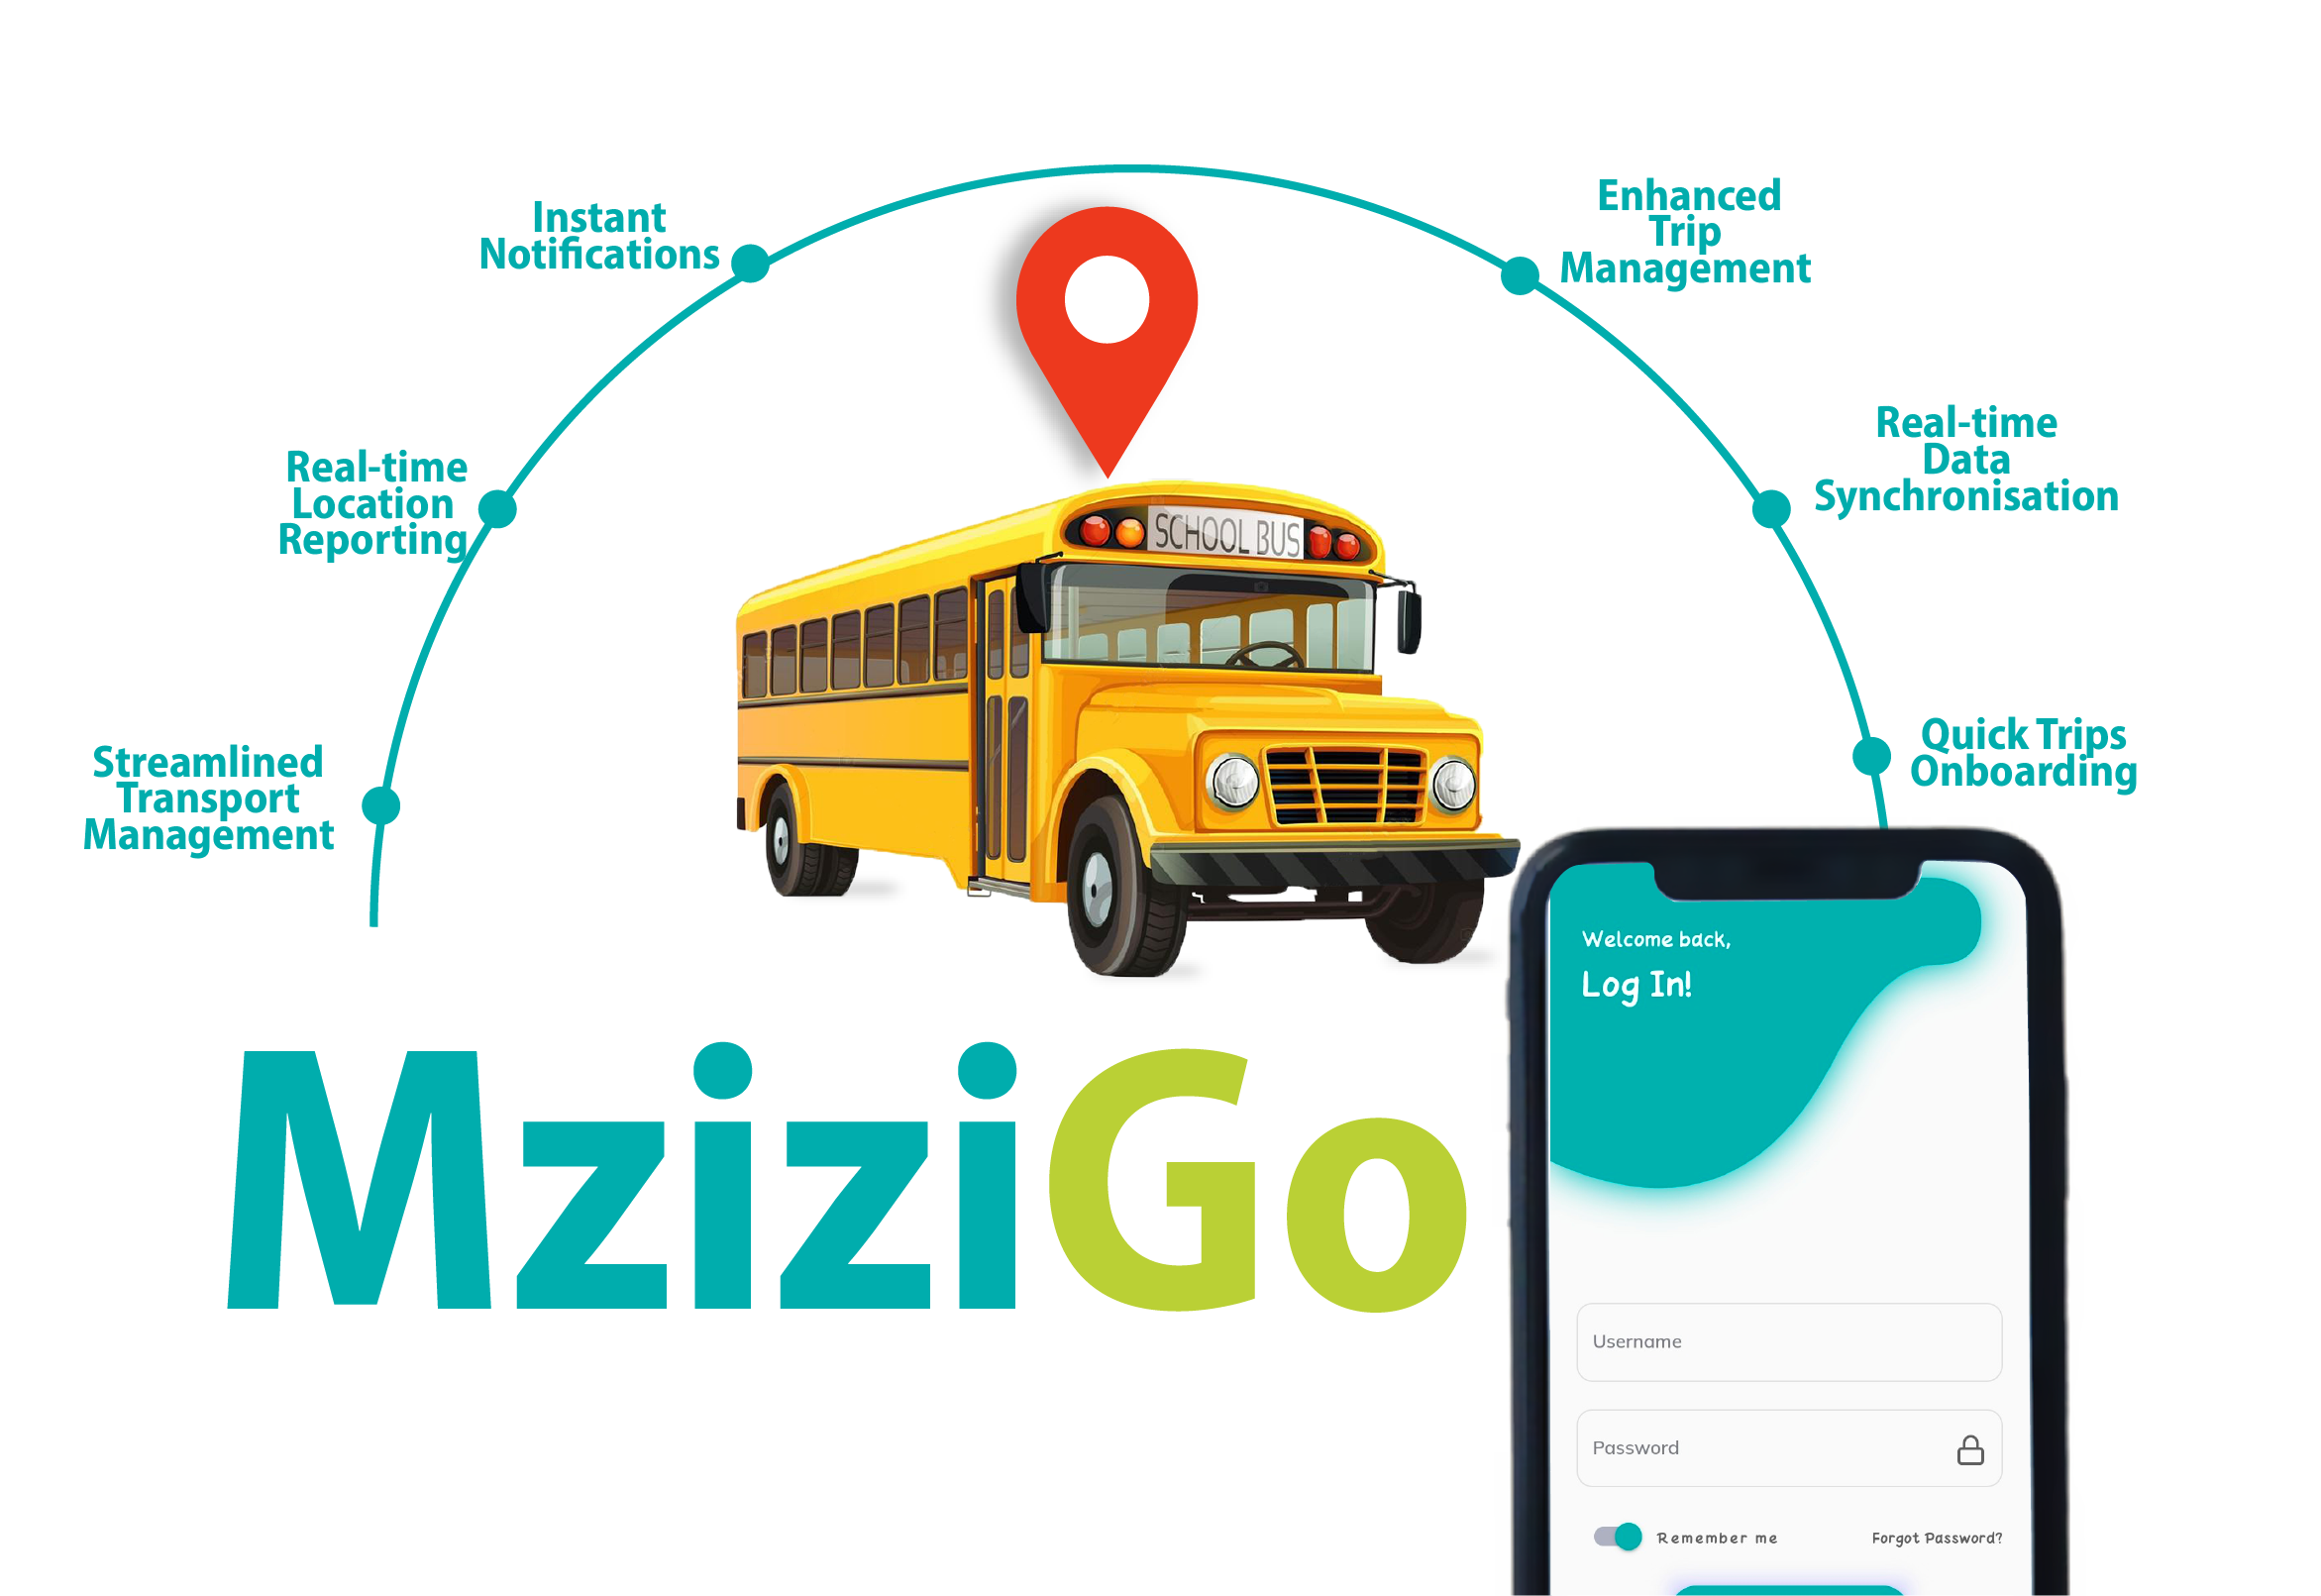 Transform Students' Transportation with MziziGo